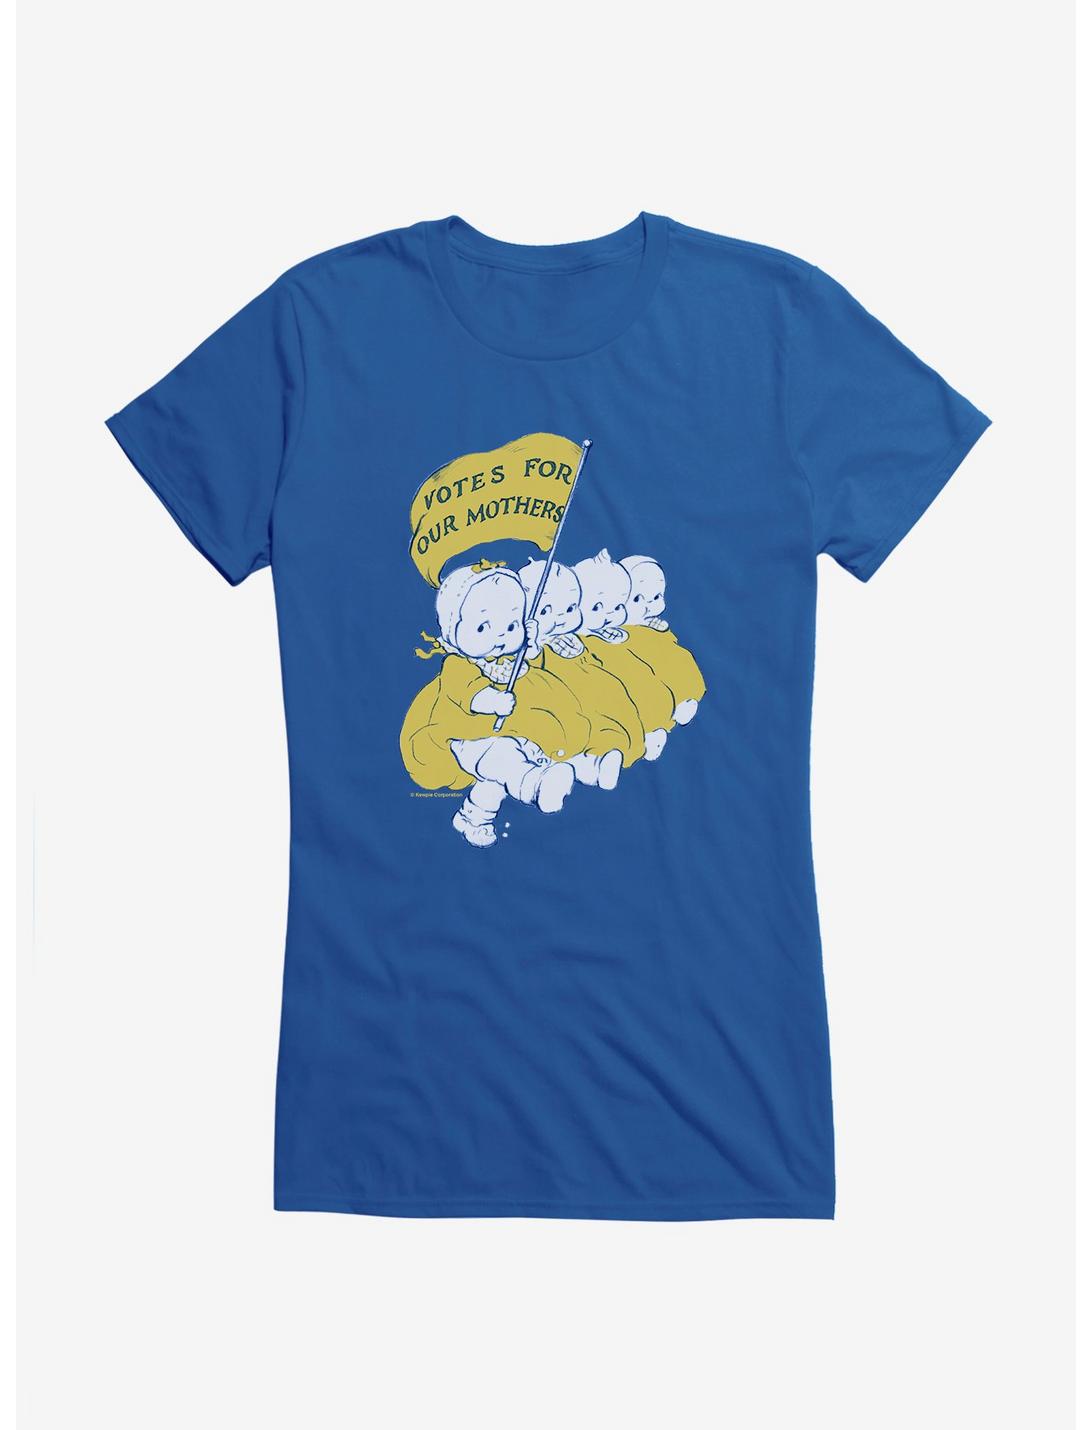 Kewpie Votes For Our Mother Banner Girls T-Shirt, ROYAL, hi-res